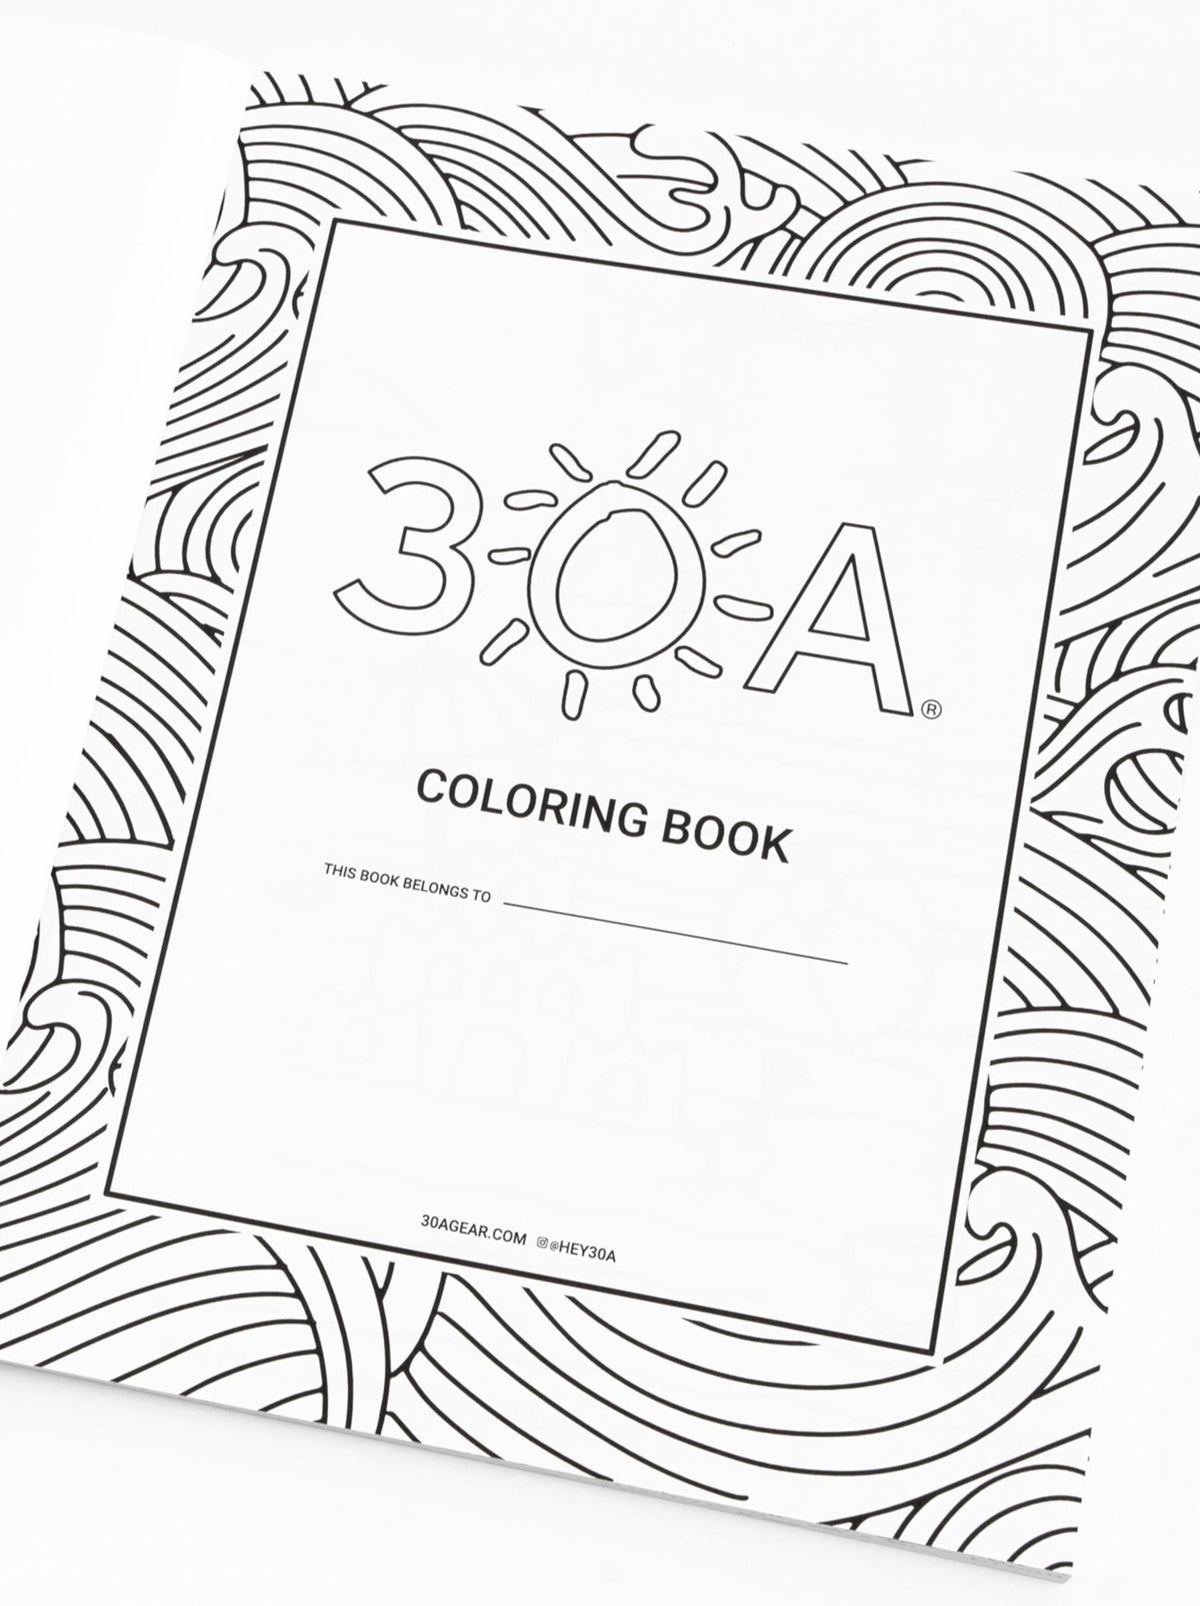 30A Coloring Book